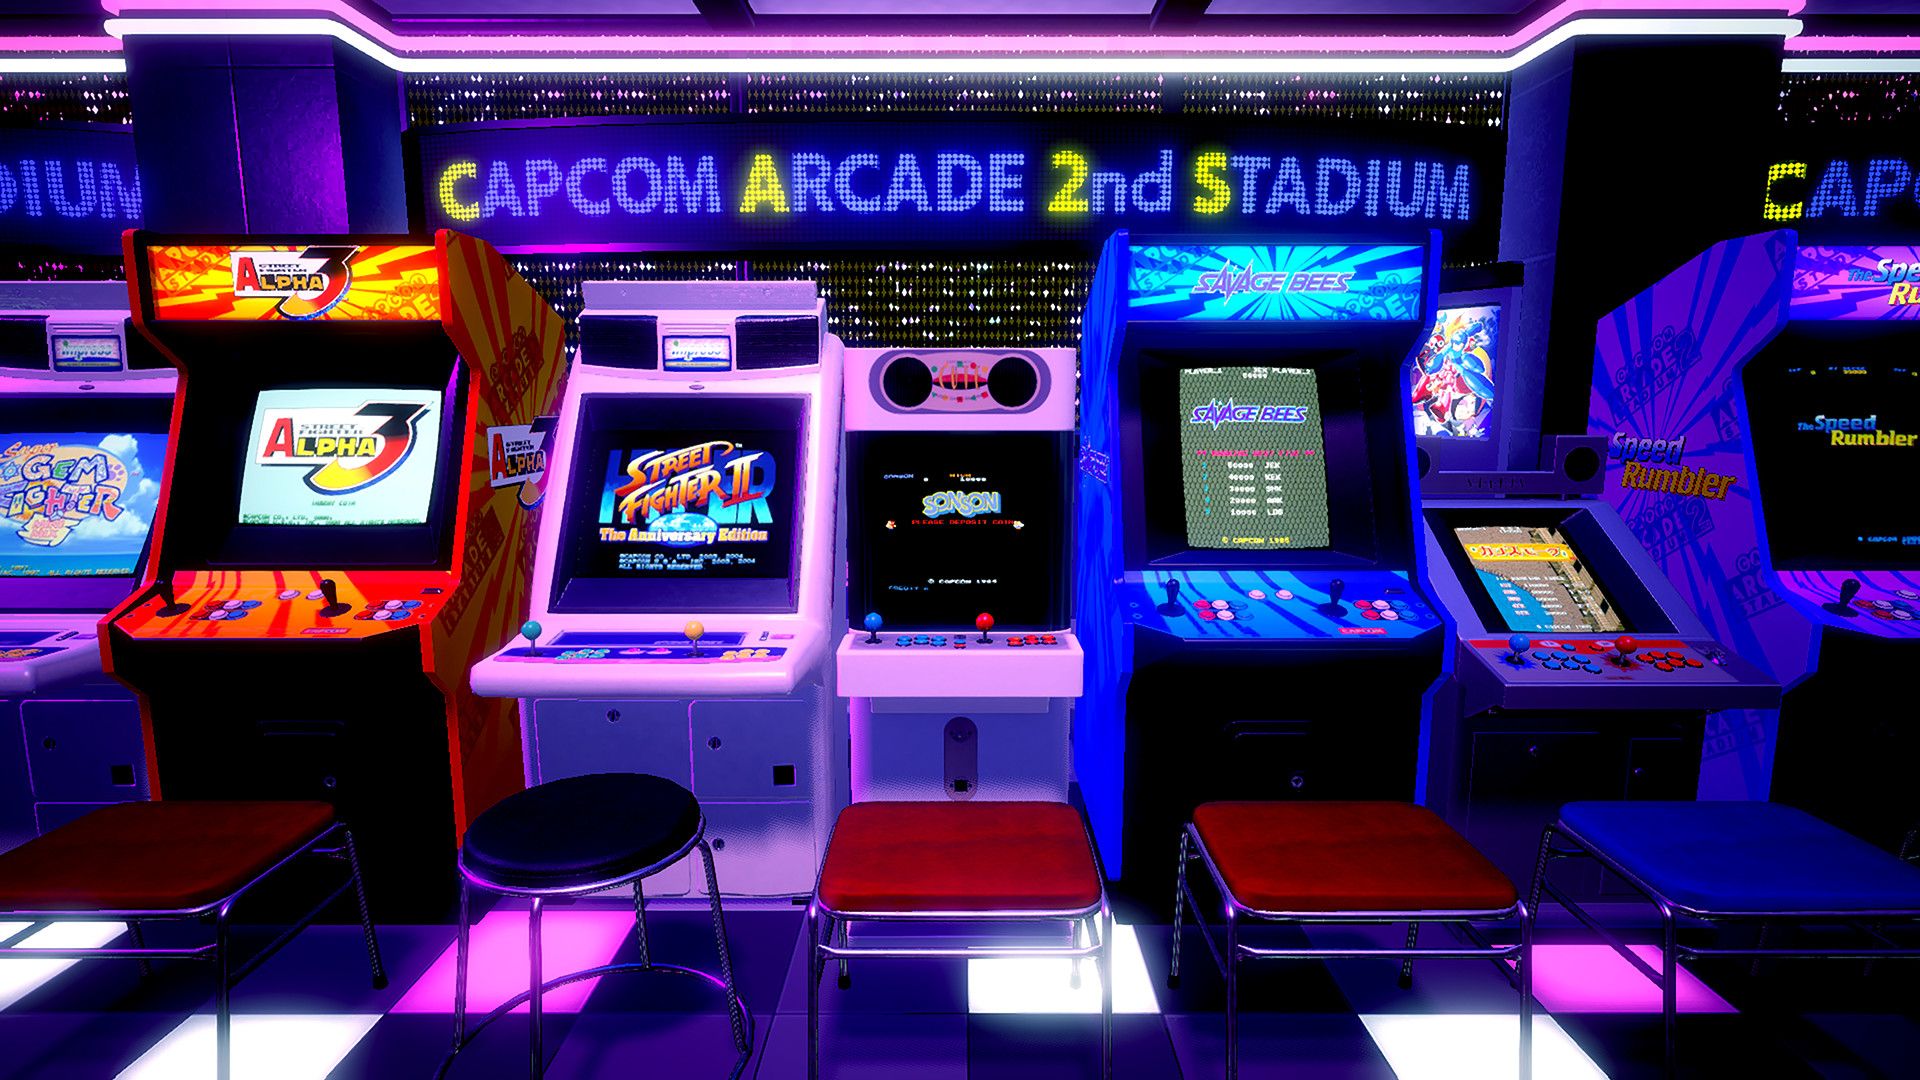 Capcom Arcade 2nd Stadium release date